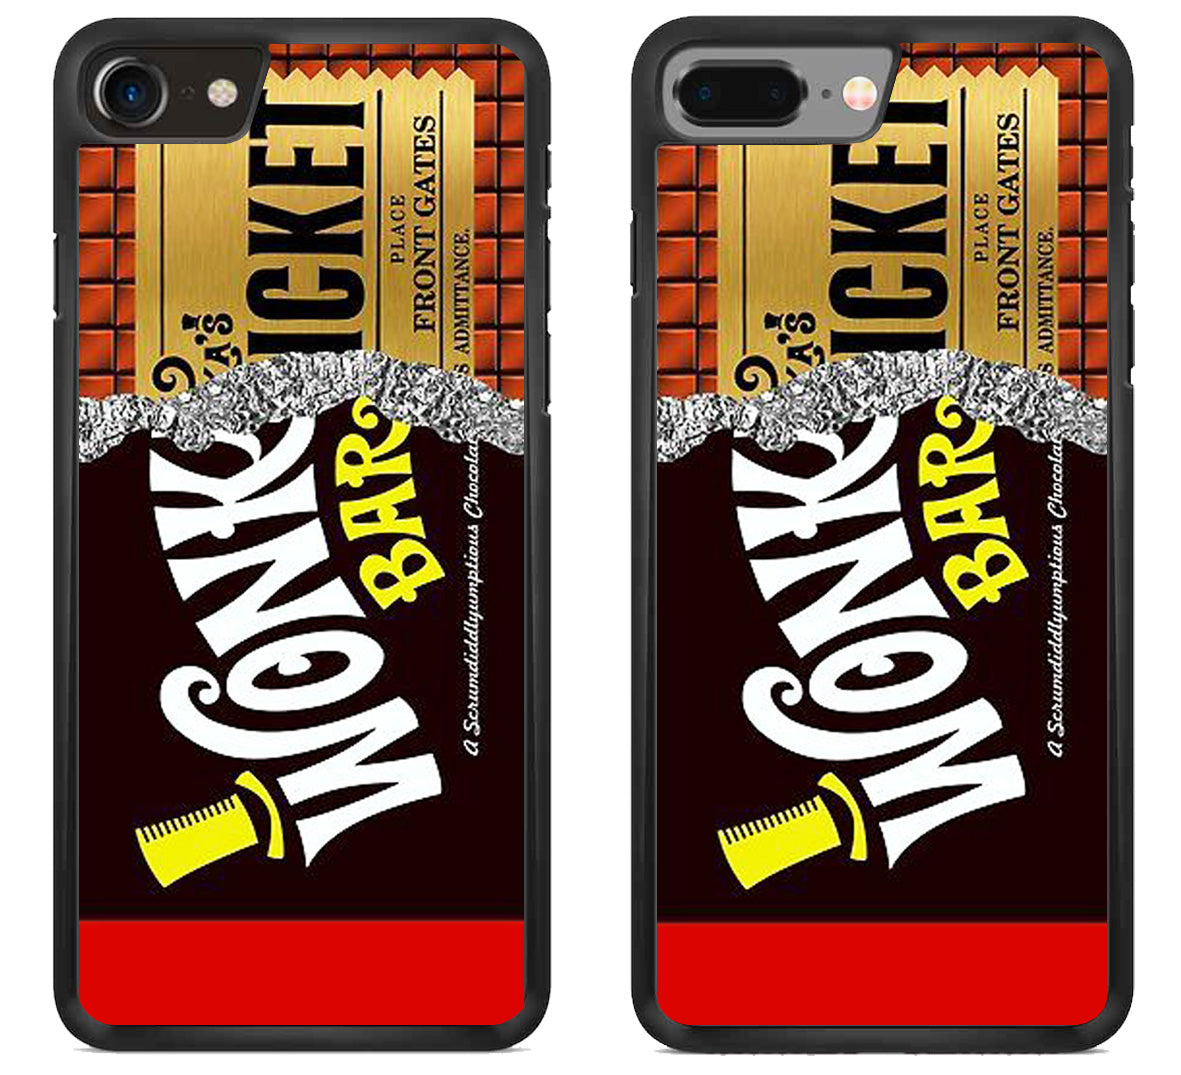 Willy Wonka Bar Ticket iPhone 8